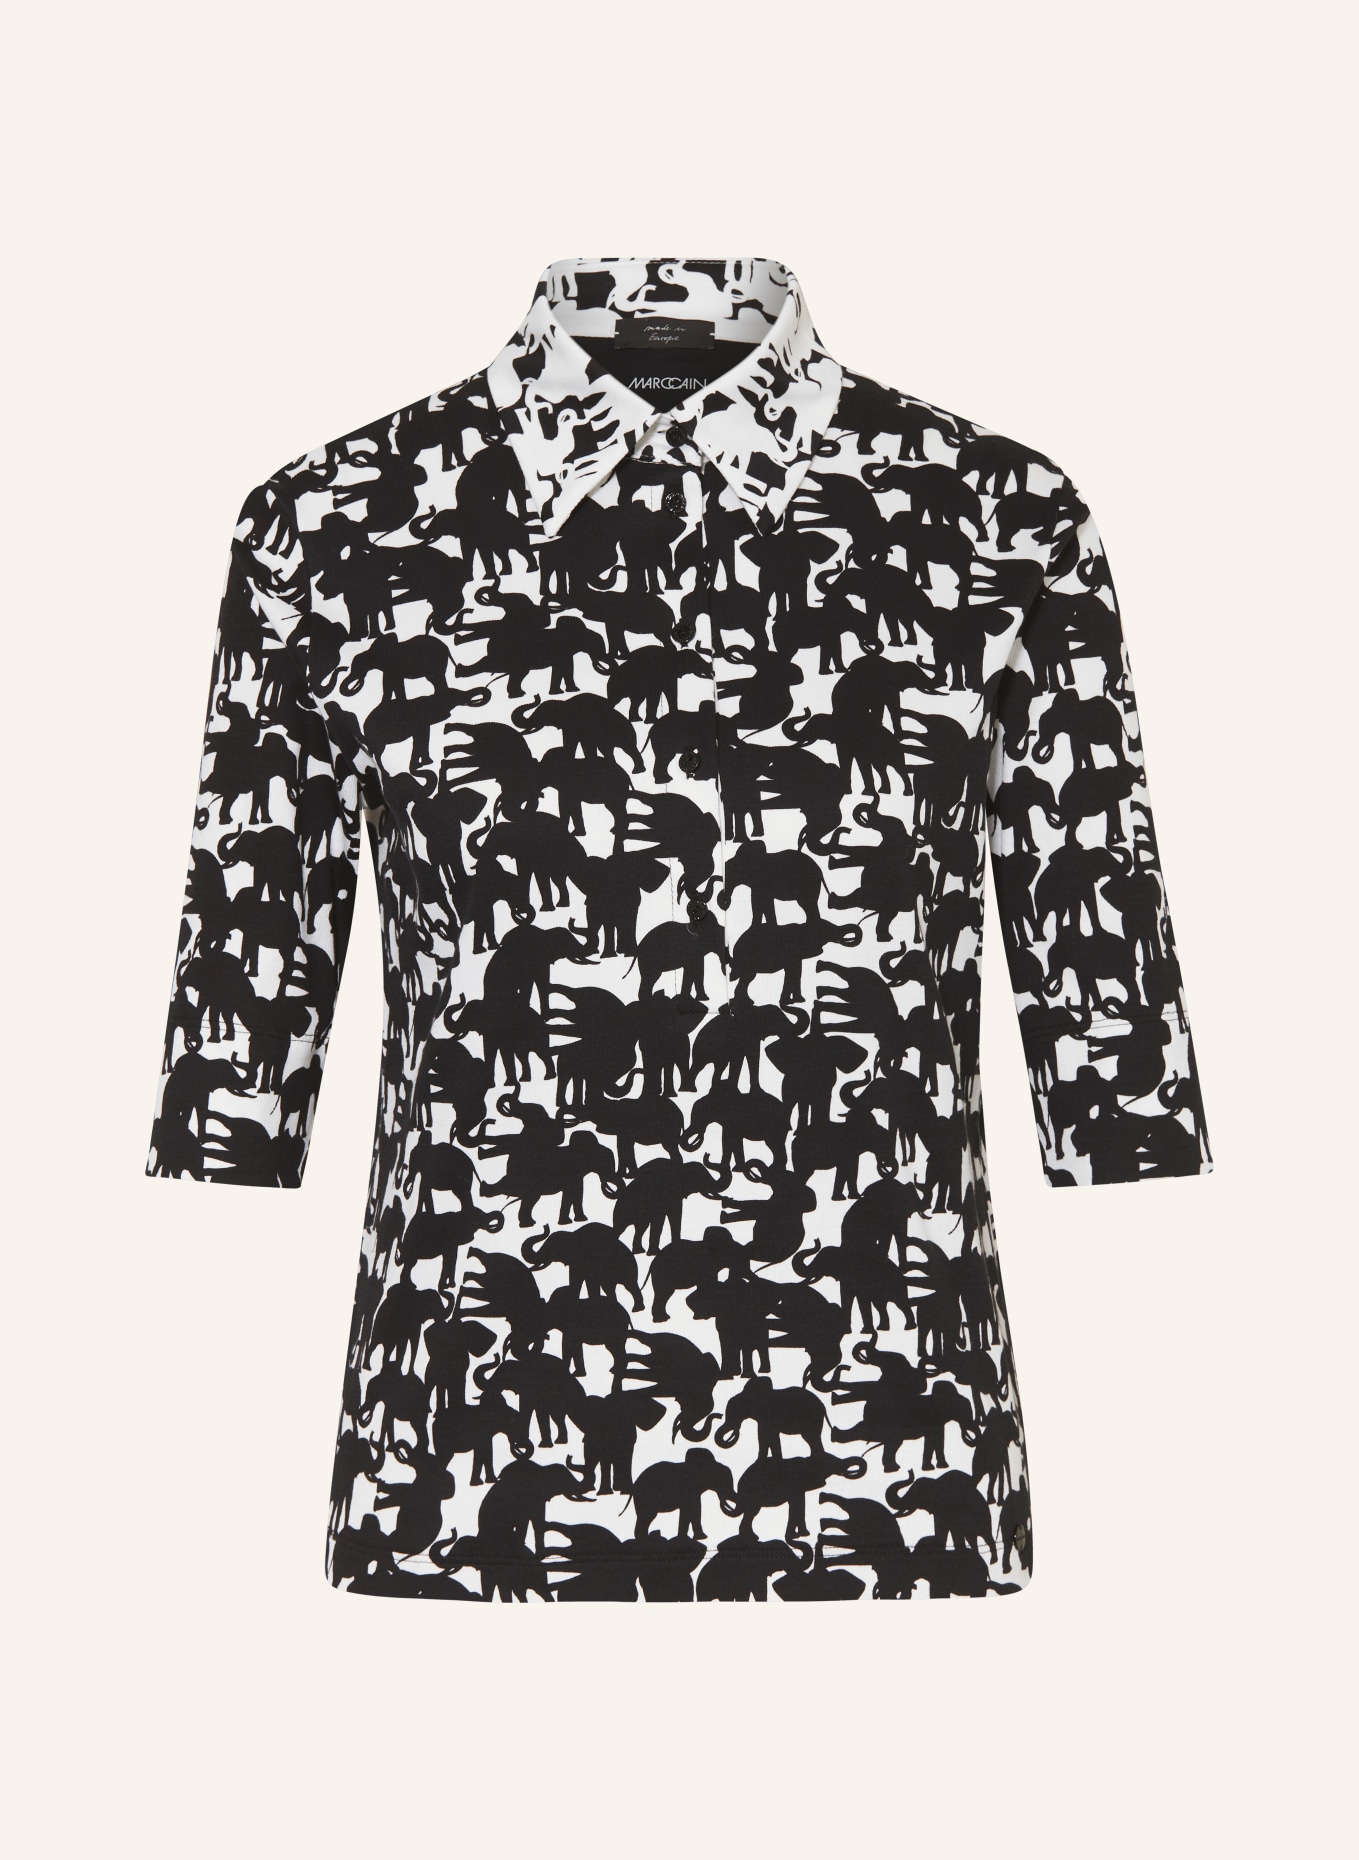 MARC CAIN Jersey-Poloshirt mit 3/4-Arm, Farbe: 910 black and white (Bild 1)